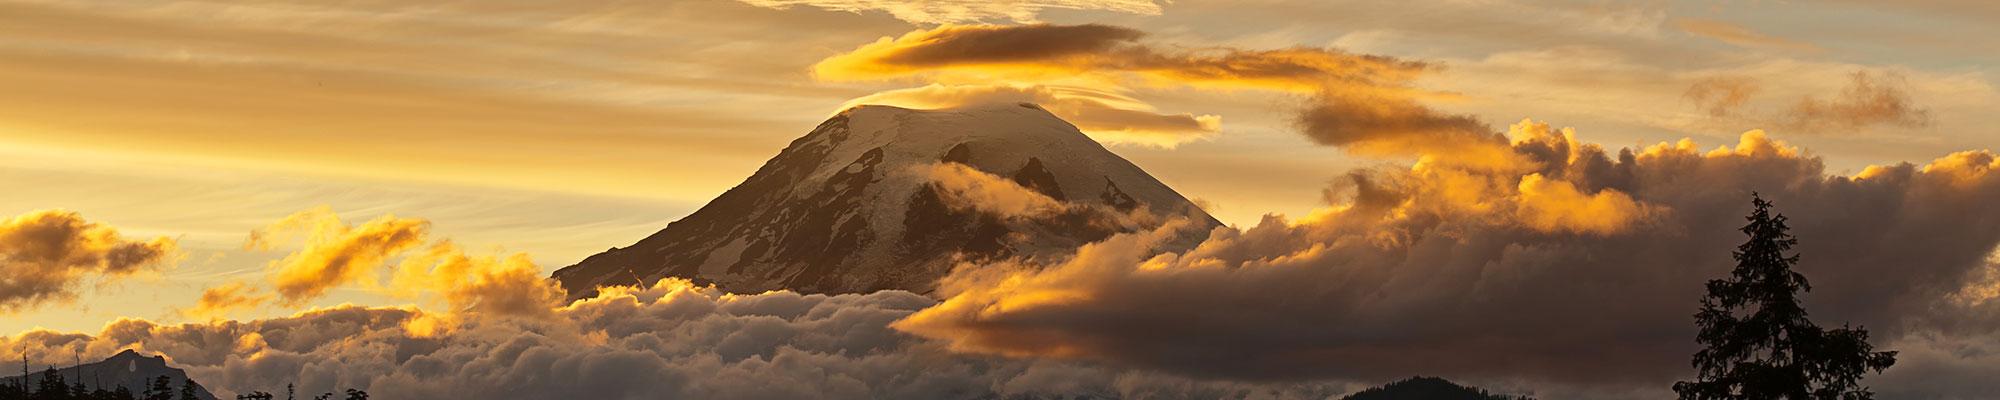 Mount Rainier with a golden sunset